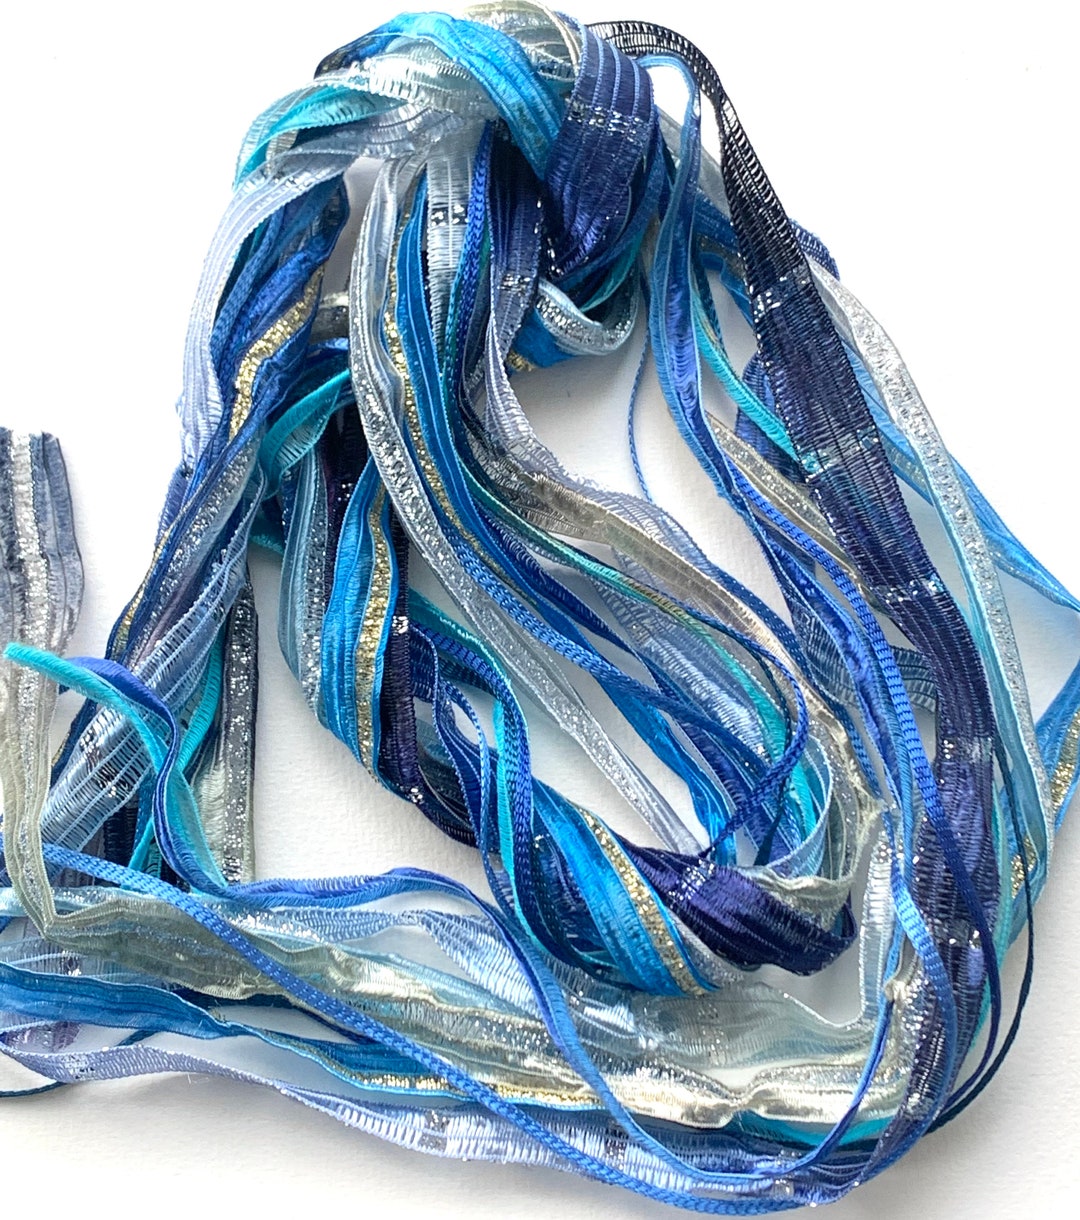 Ribbon yarn color Bright Blue – ÉllGi